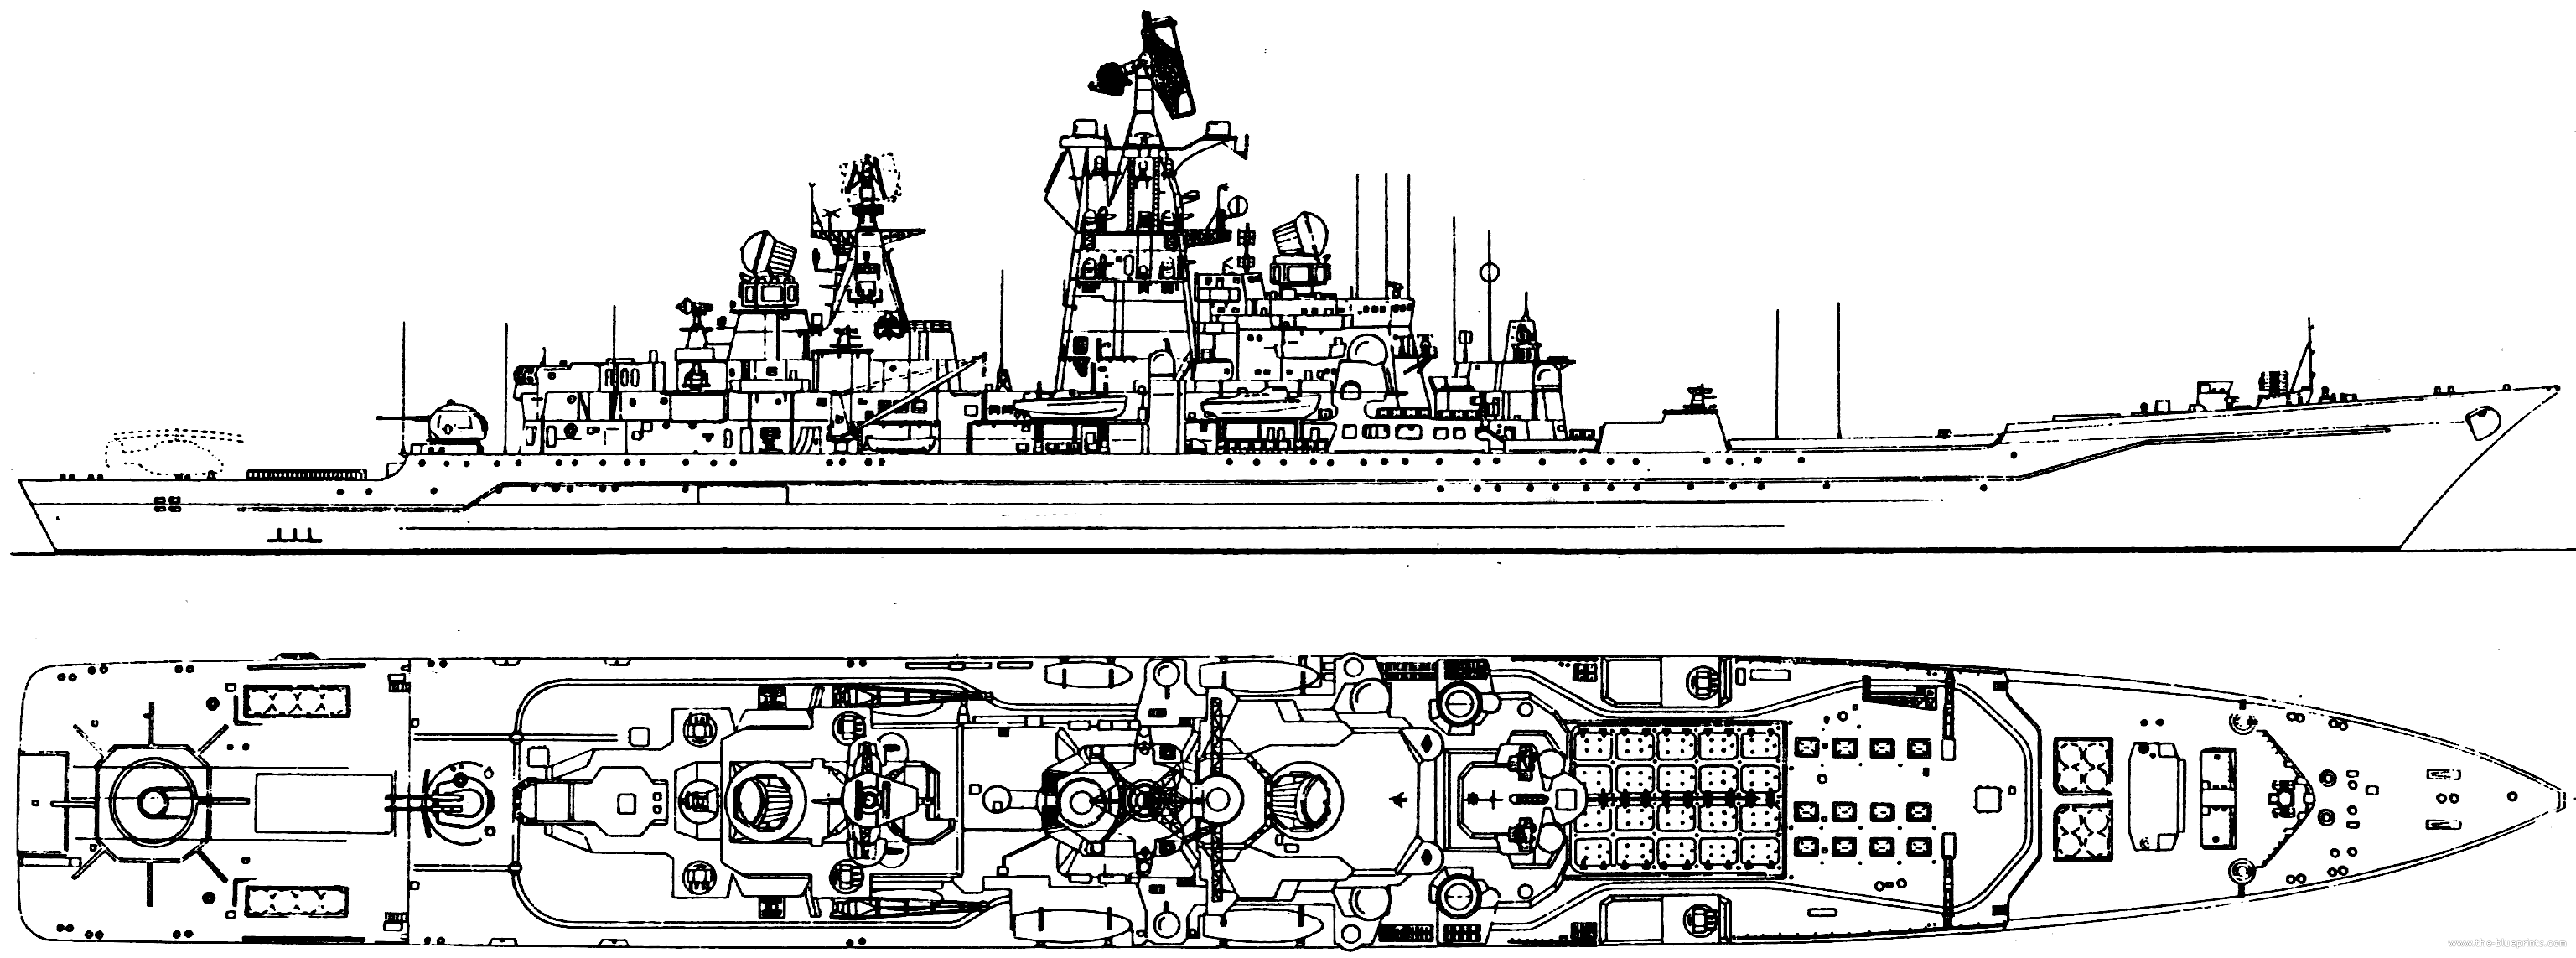 russia--frs-admiral-nakhimov-project-1144-orlan-battlecruiser-ex-ussr-kalinin-.png